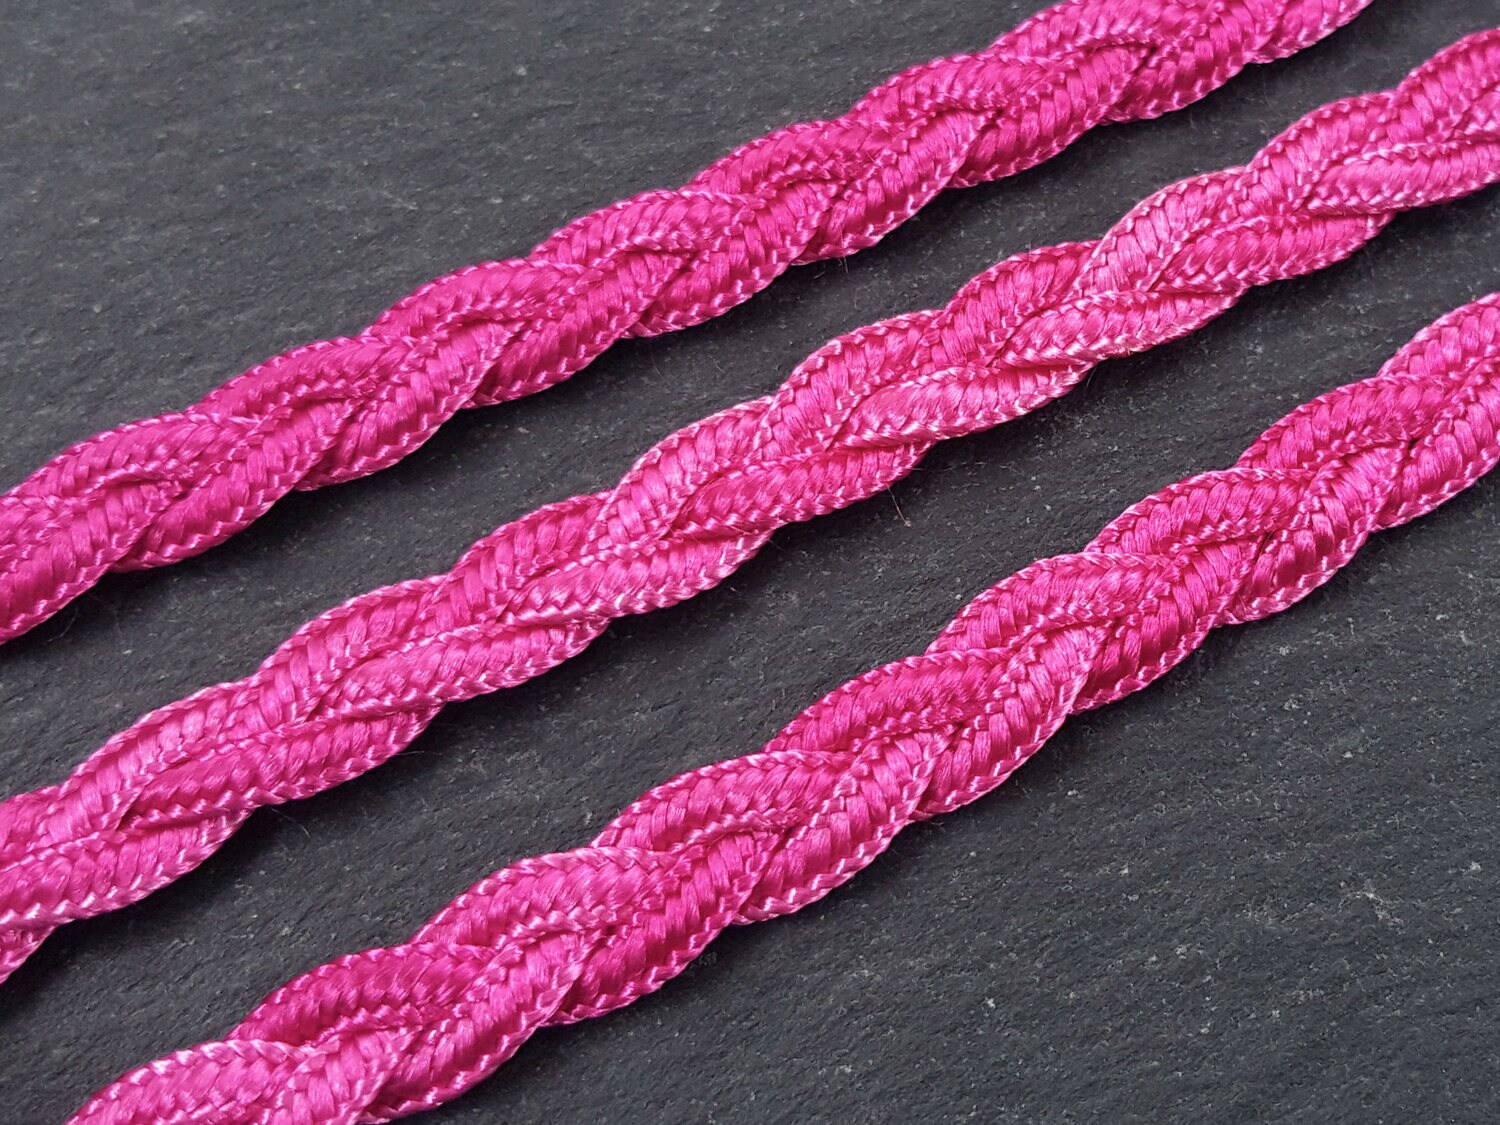 Hot Pink Braided Plait Cord Satin Silk Cord Trim - 3 Ply - 1 meters - 1.09 Yards